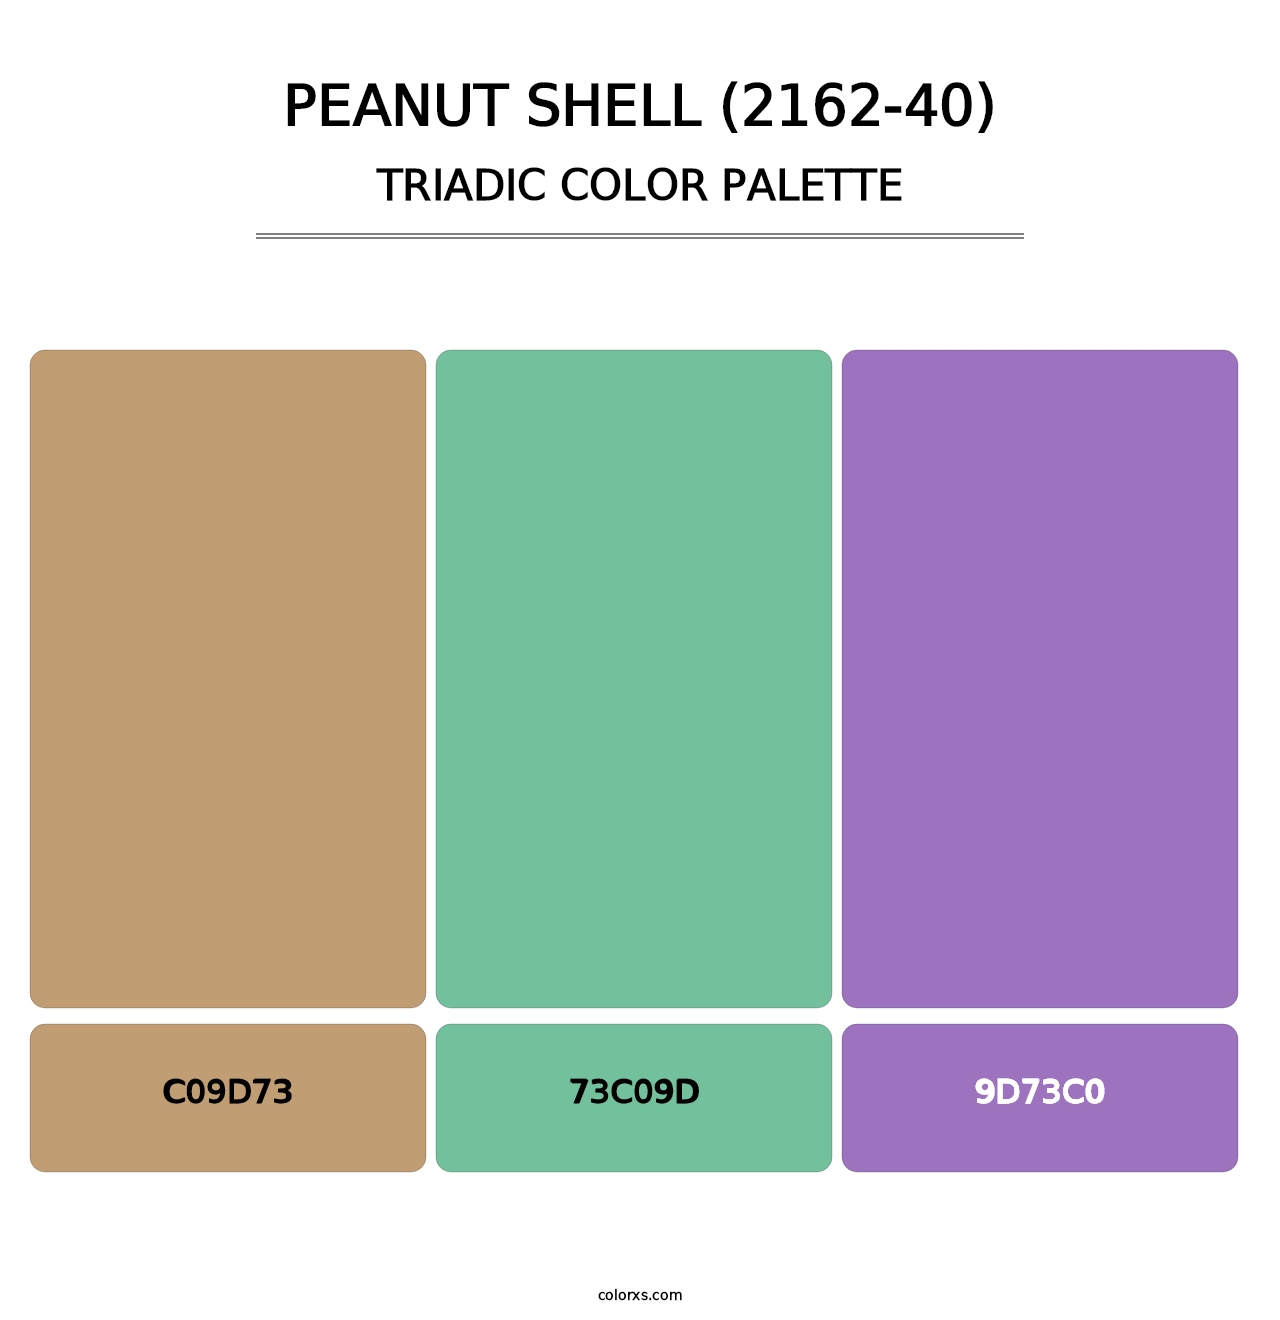 Peanut Shell (2162-40) - Triadic Color Palette